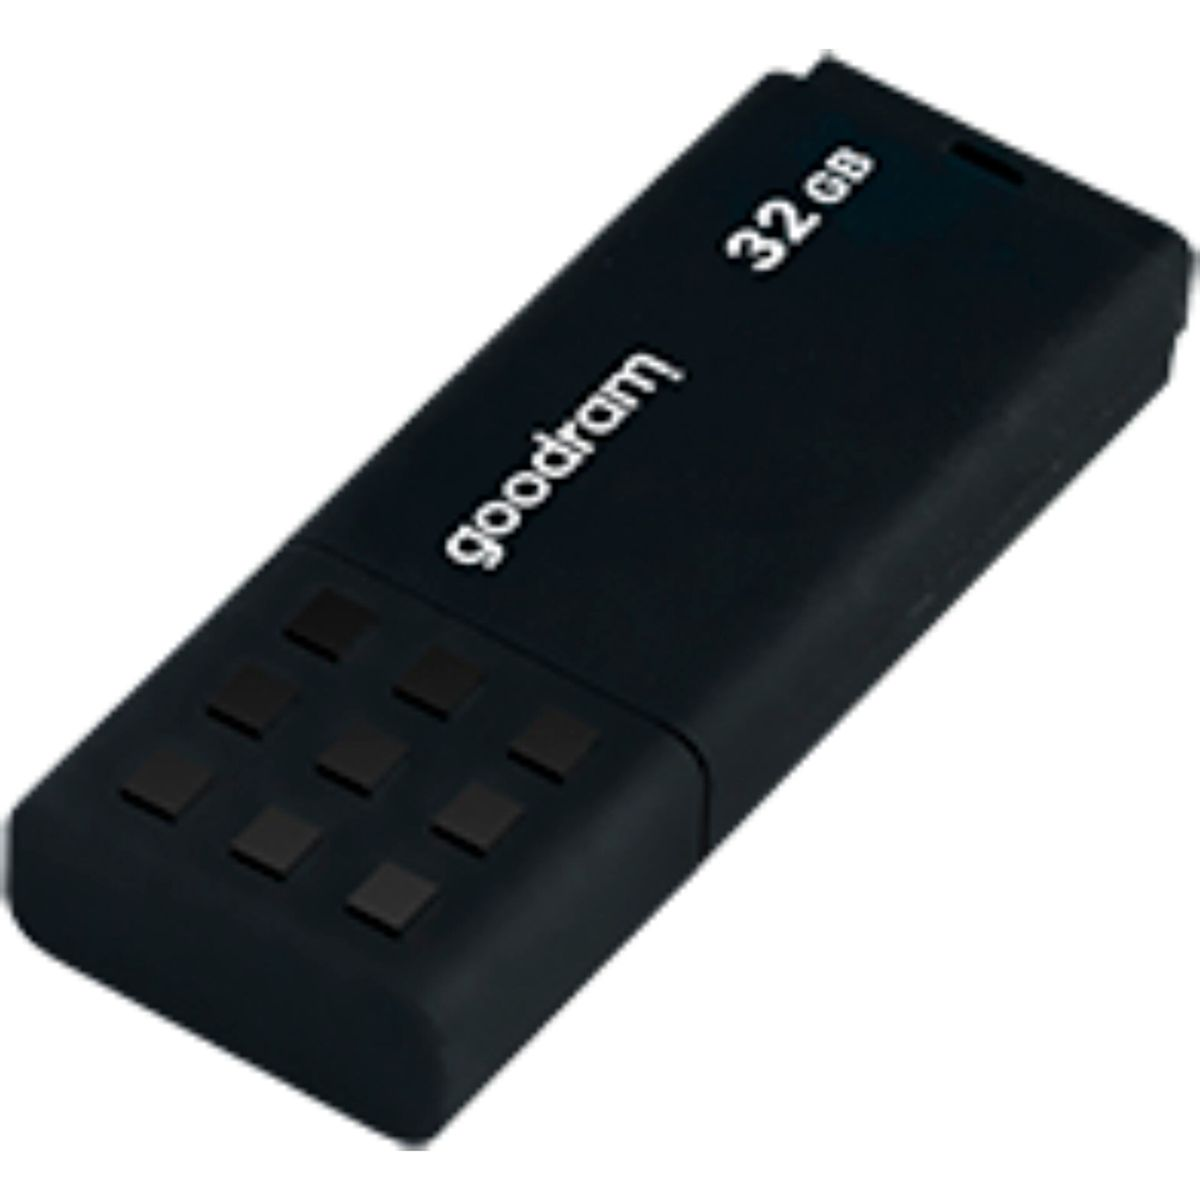 GOODRAM 32 32GB UME3 (schwarz, GB) Black USB 3.0 USB Stick